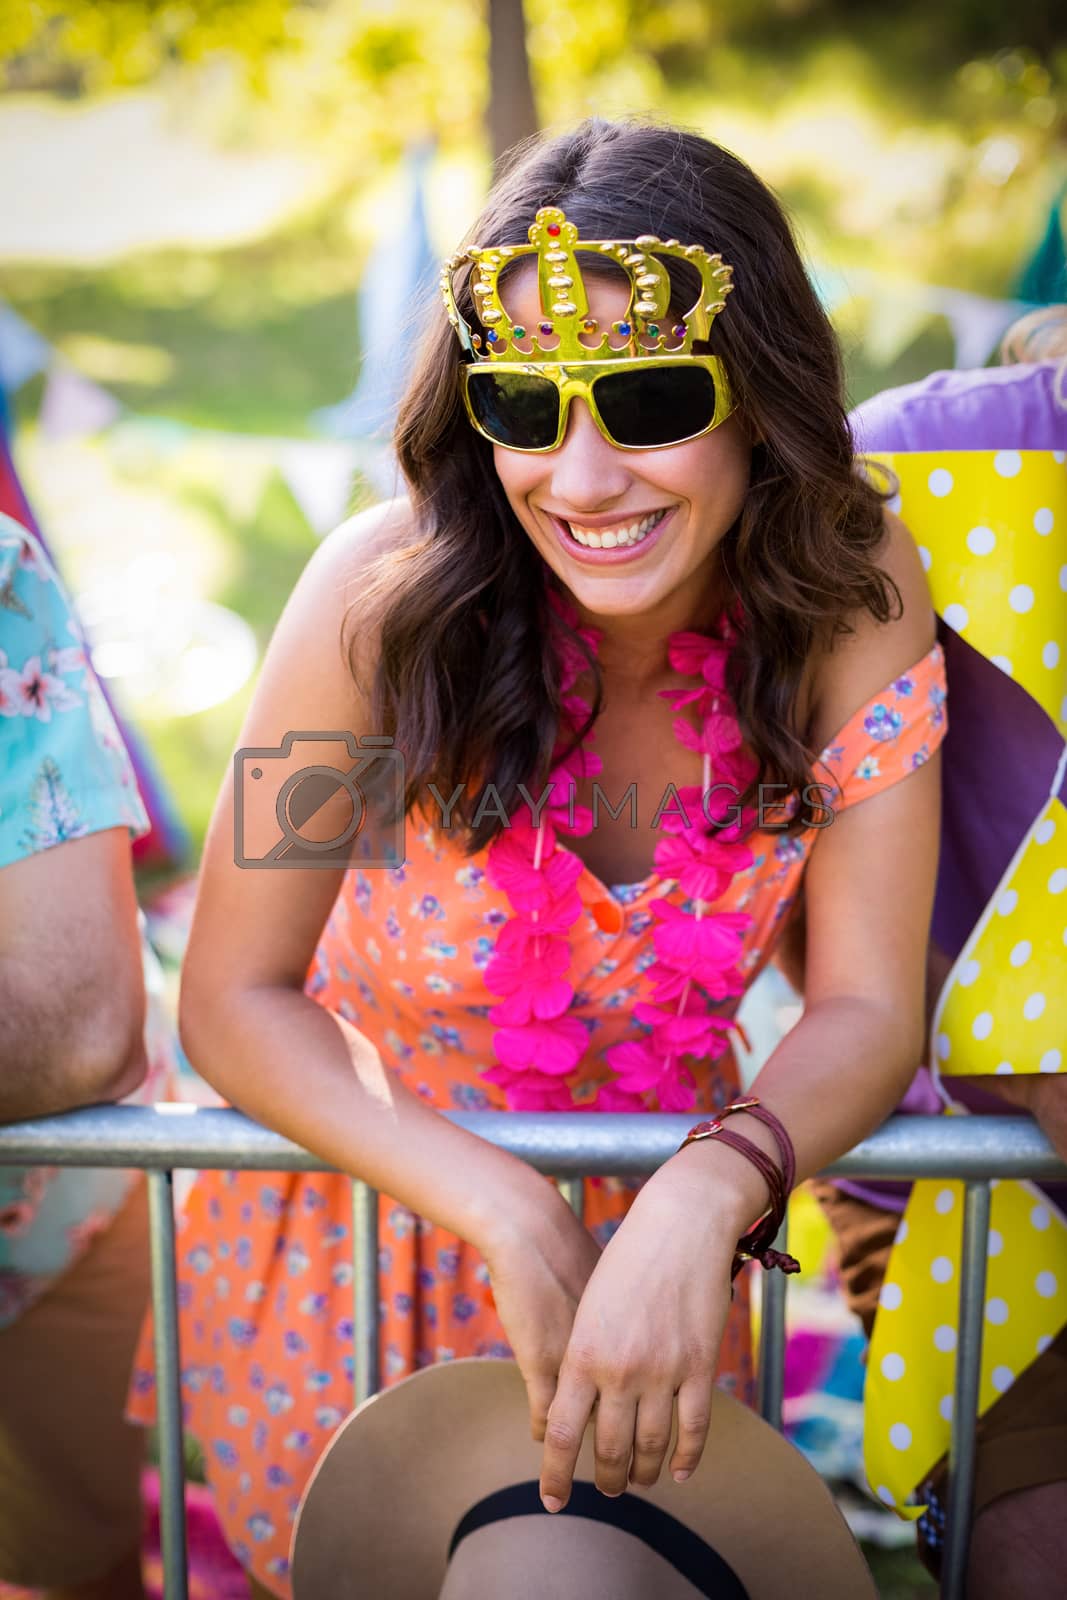 Royalty free image of Beautiful woman in fancy sunglasses by Wavebreakmedia